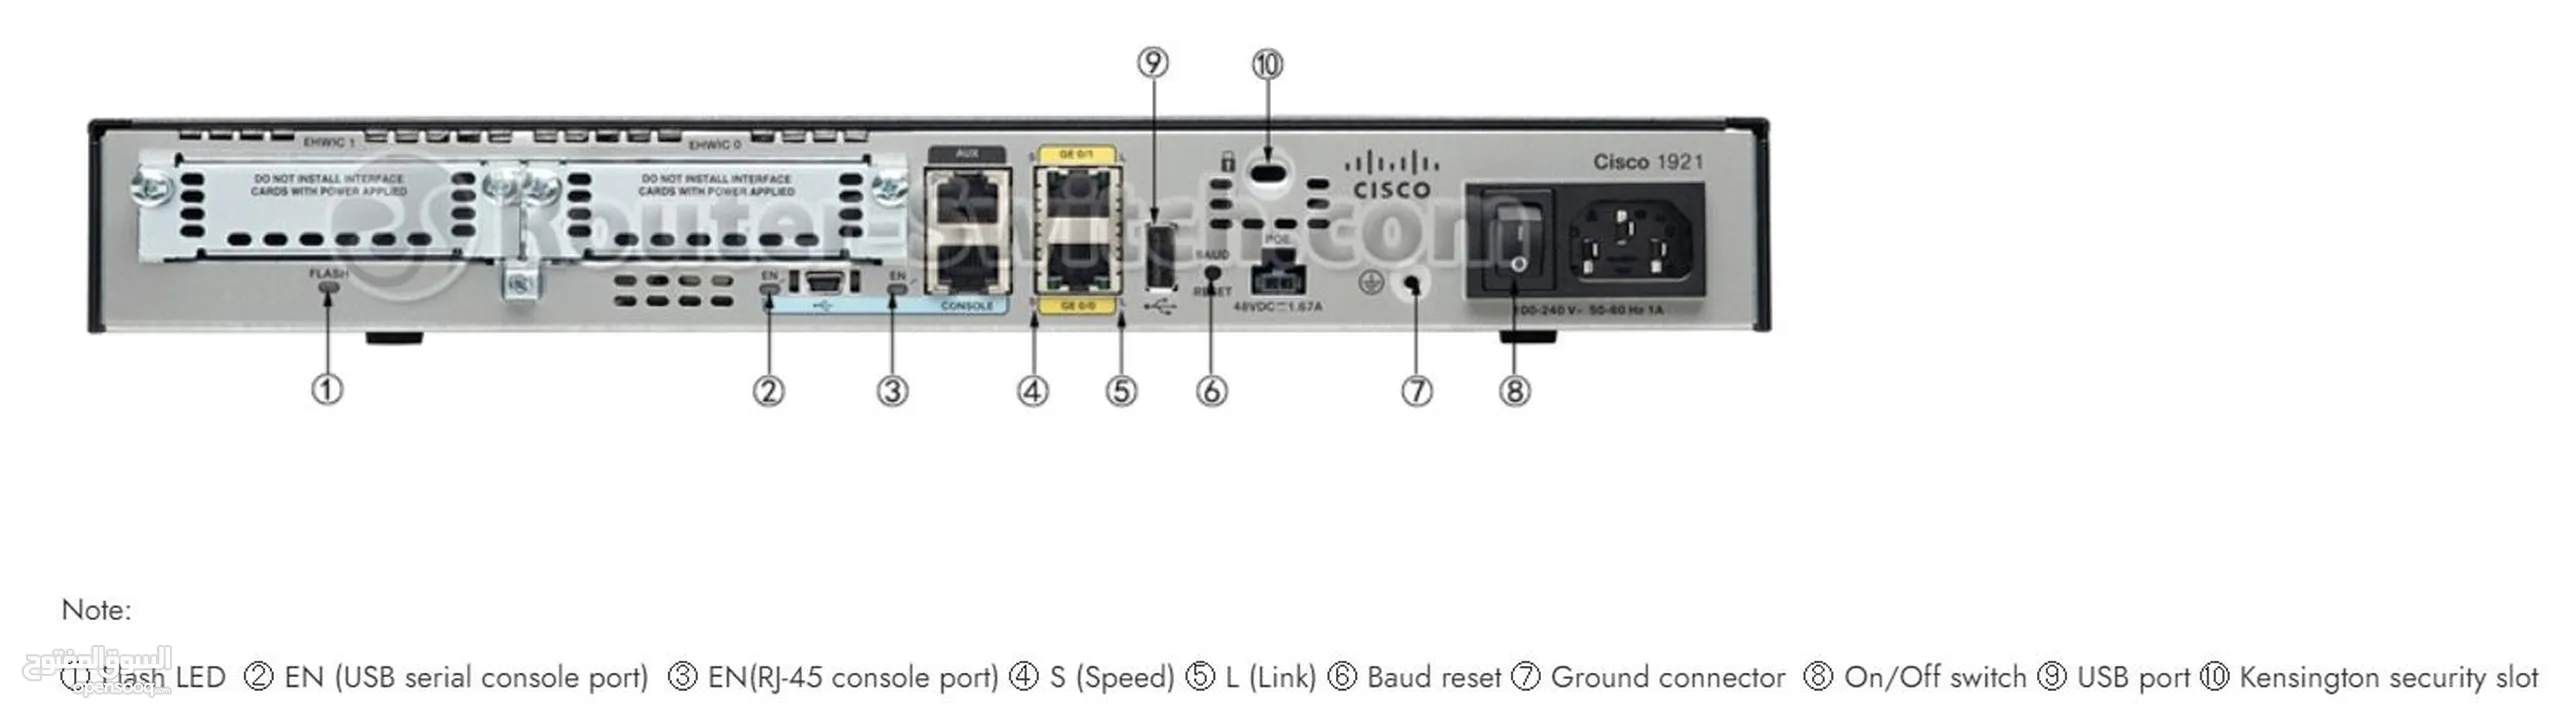 Cisco Router 1921 / K9